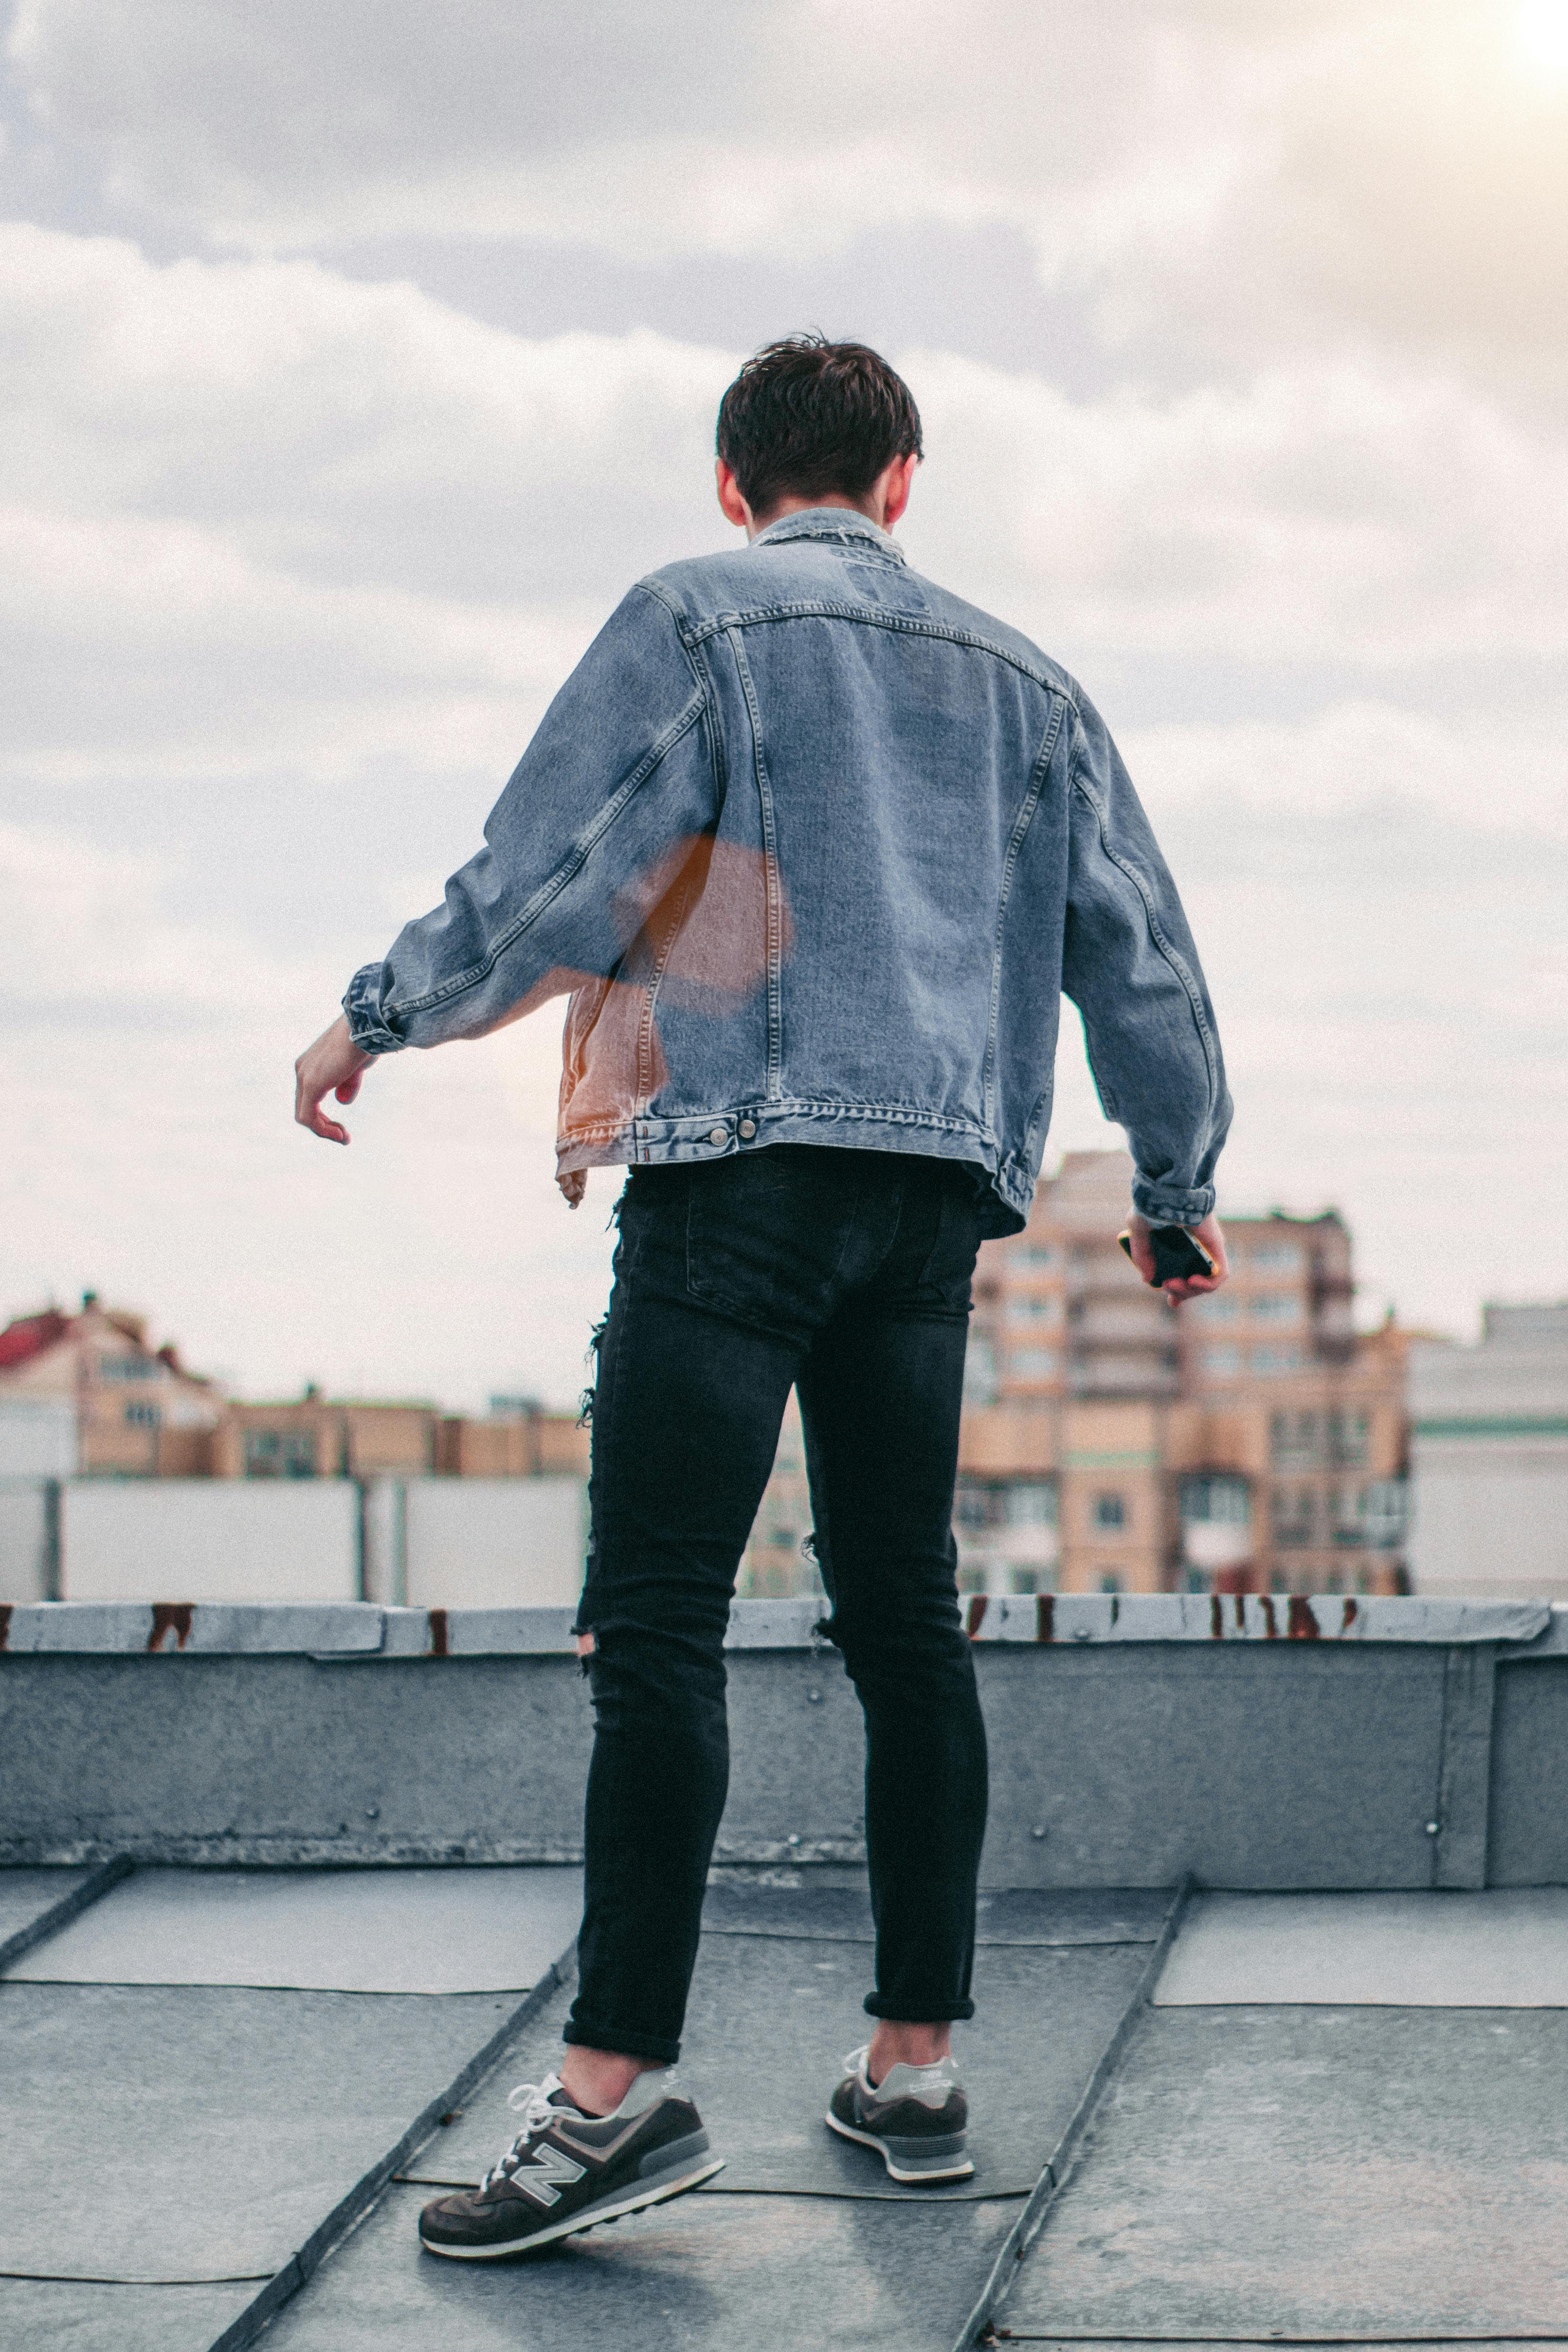 Men's Designer Jeans | Blue, Dark & Black Denim Pants | PAIGE®